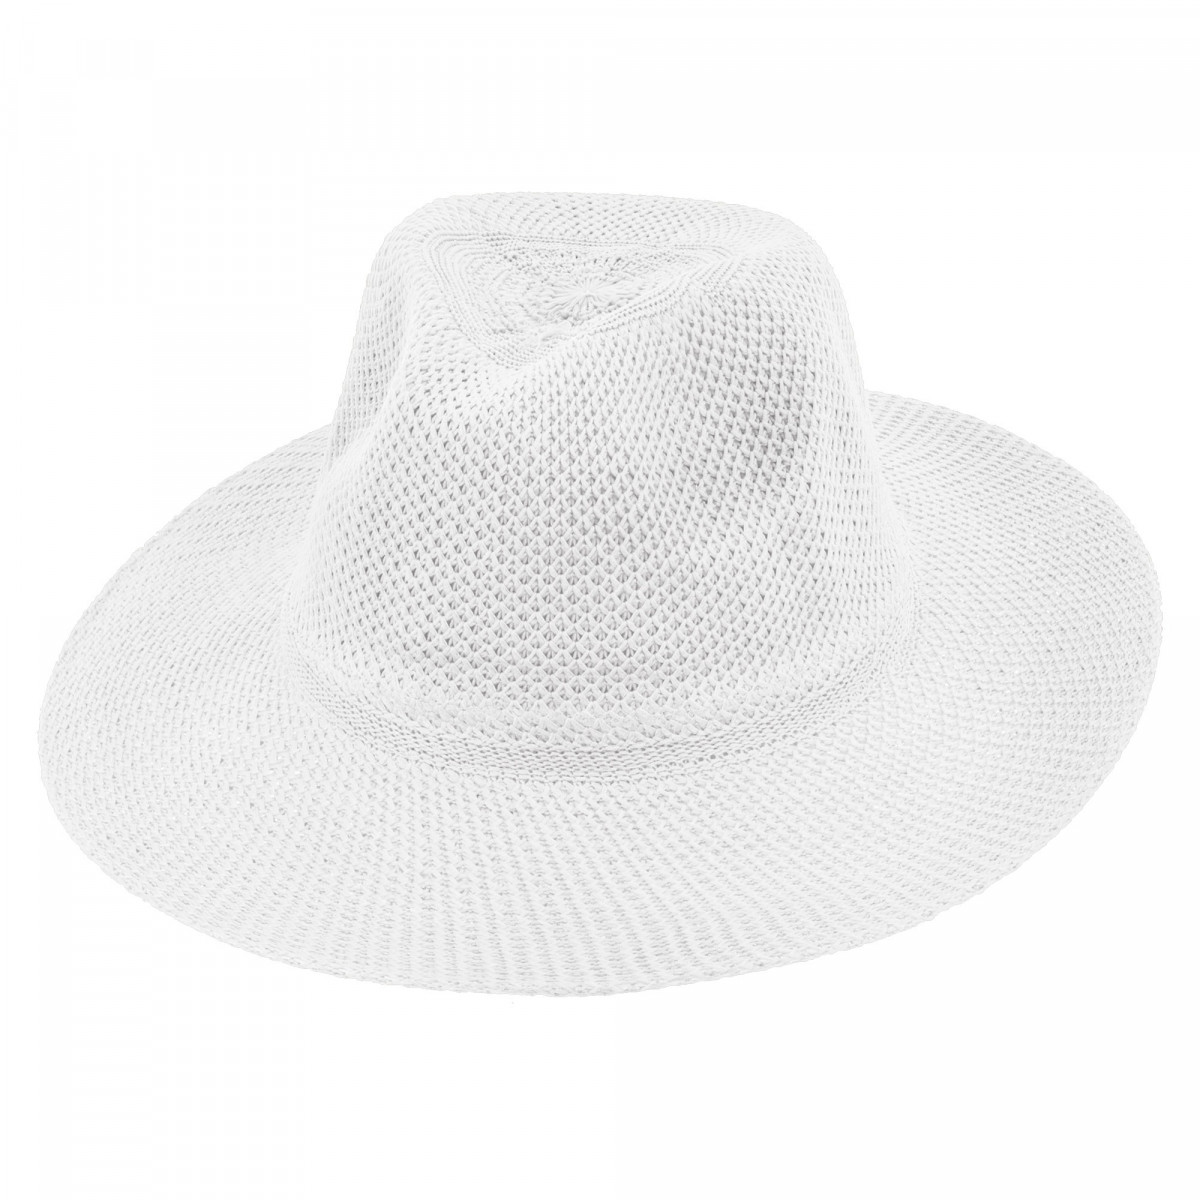 Chapéu indiana branco